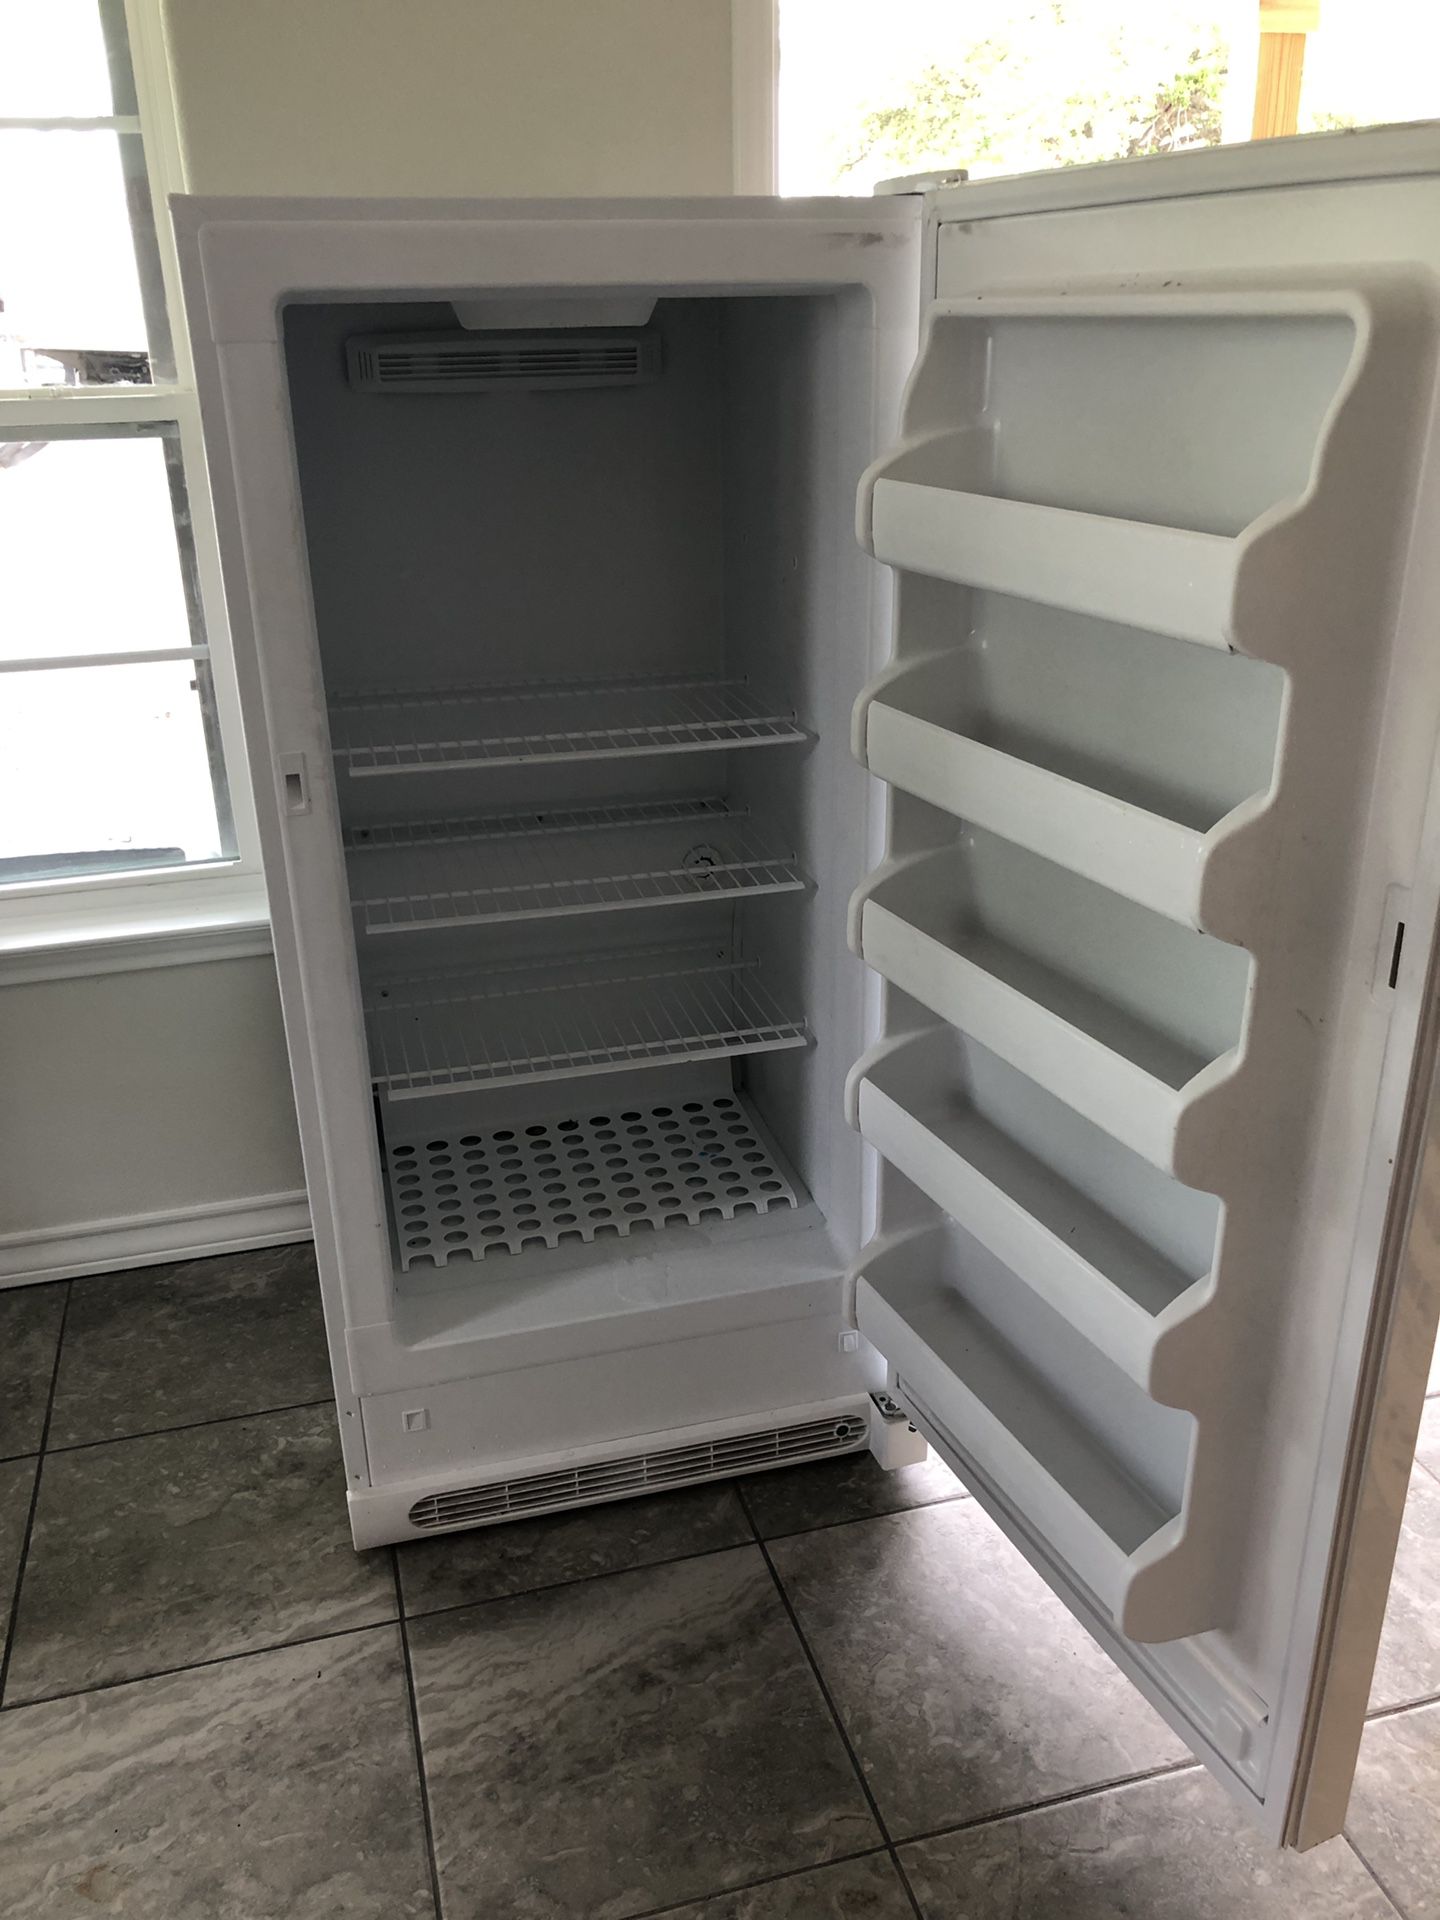 Frigidaire stand up freezer